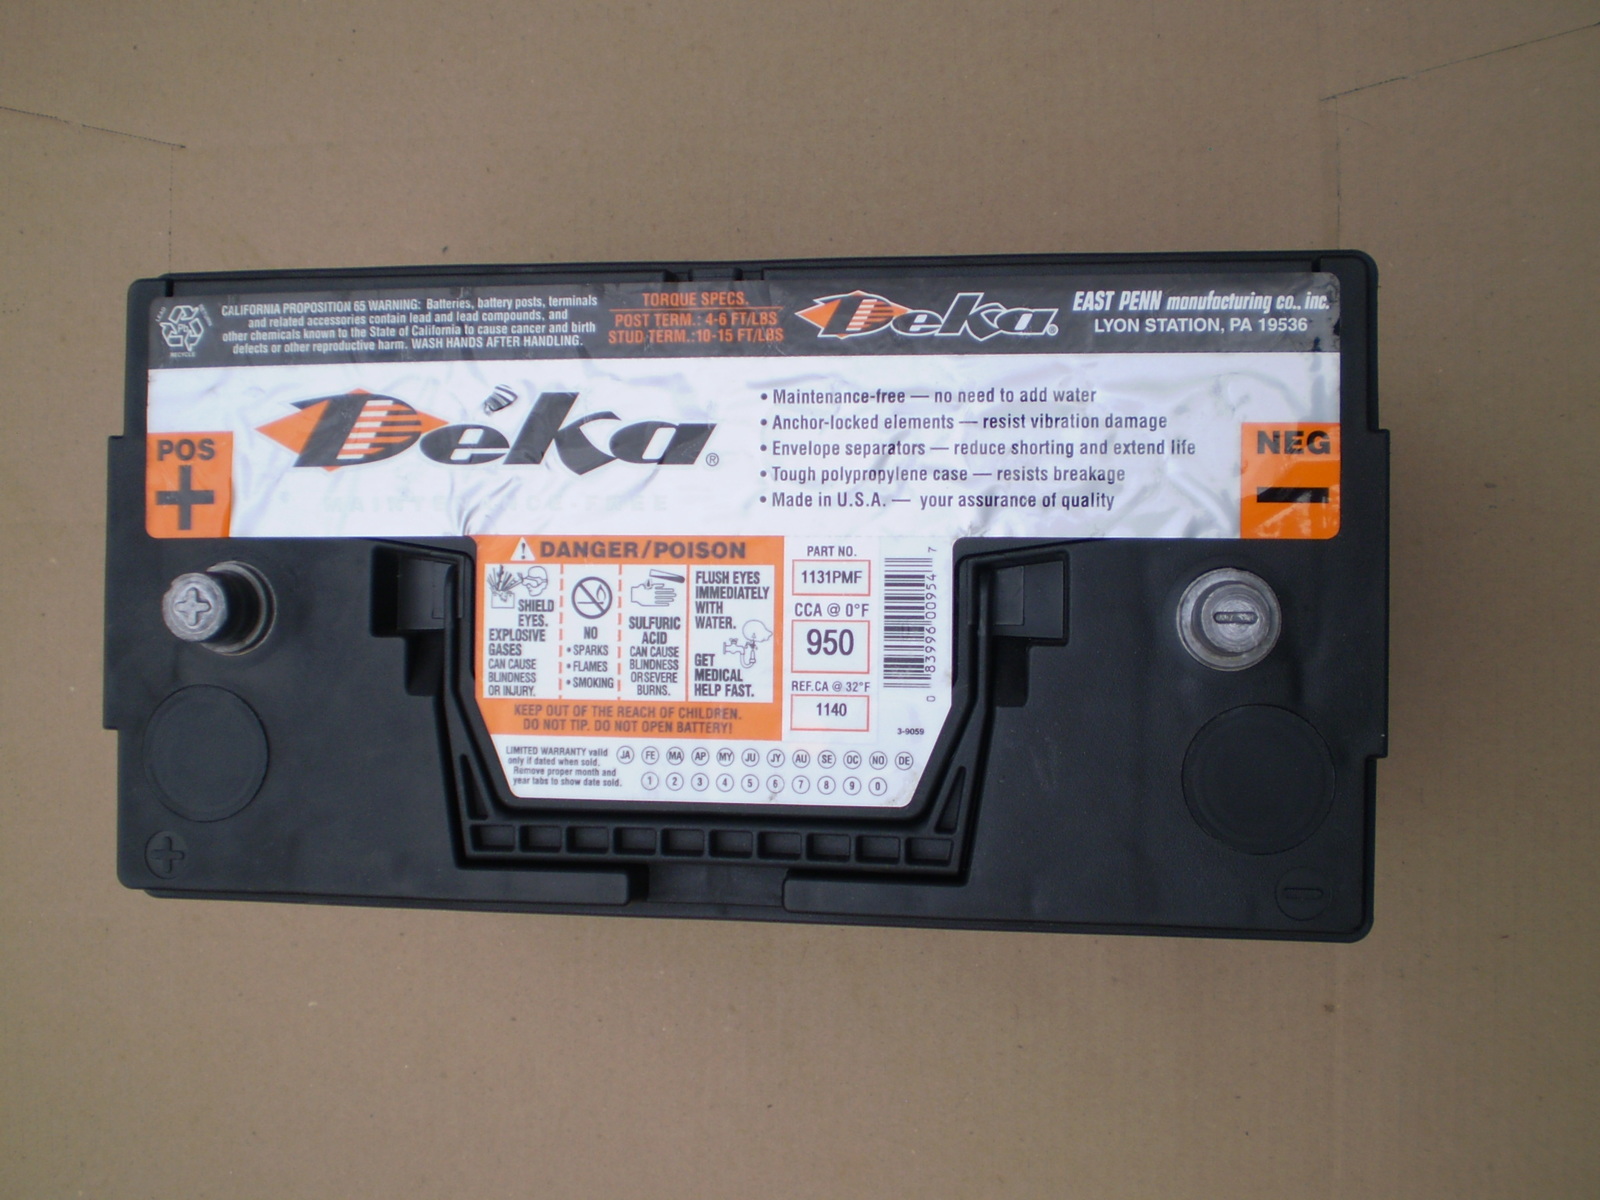 deka batteries